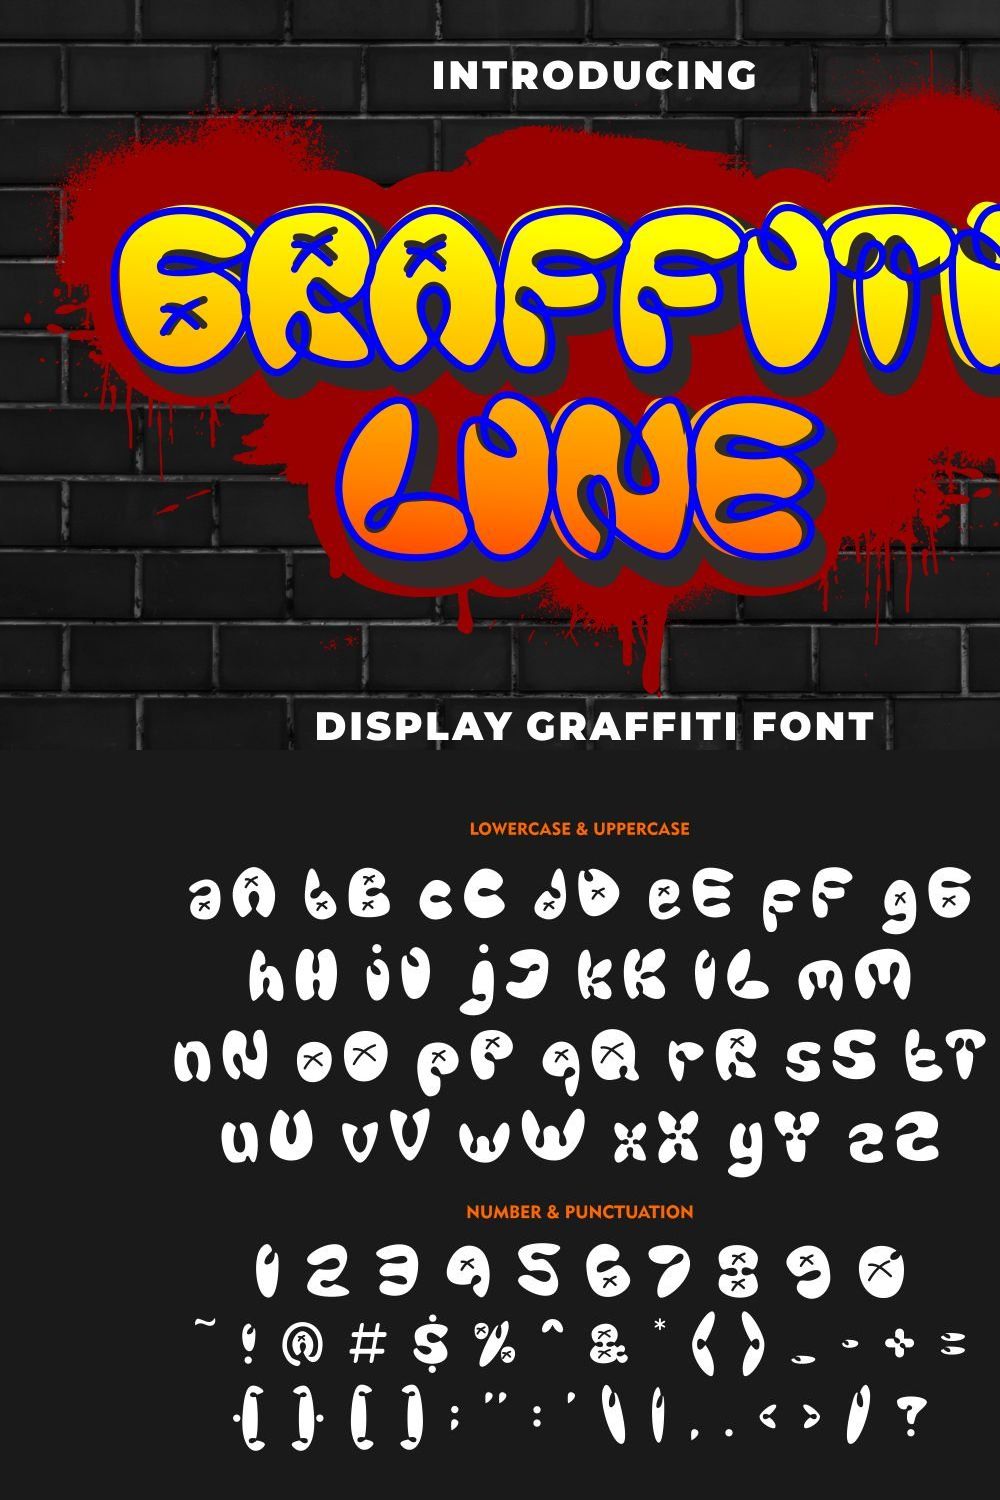 Graffiti Line - Display Graffiti pinterest preview image.